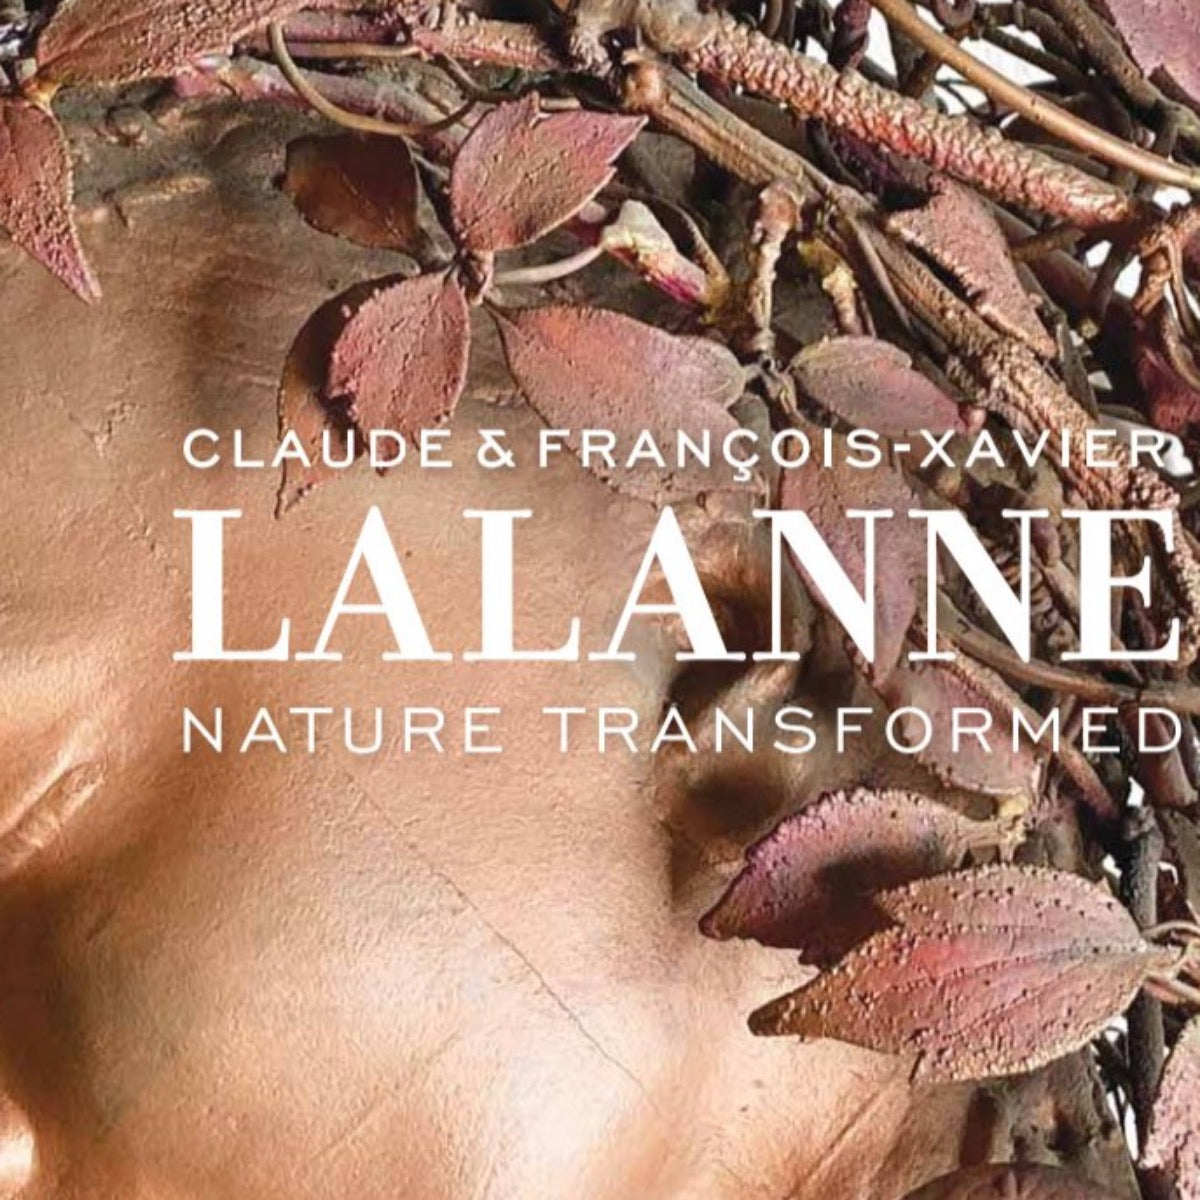 Claude and François-Xavier Lalanne